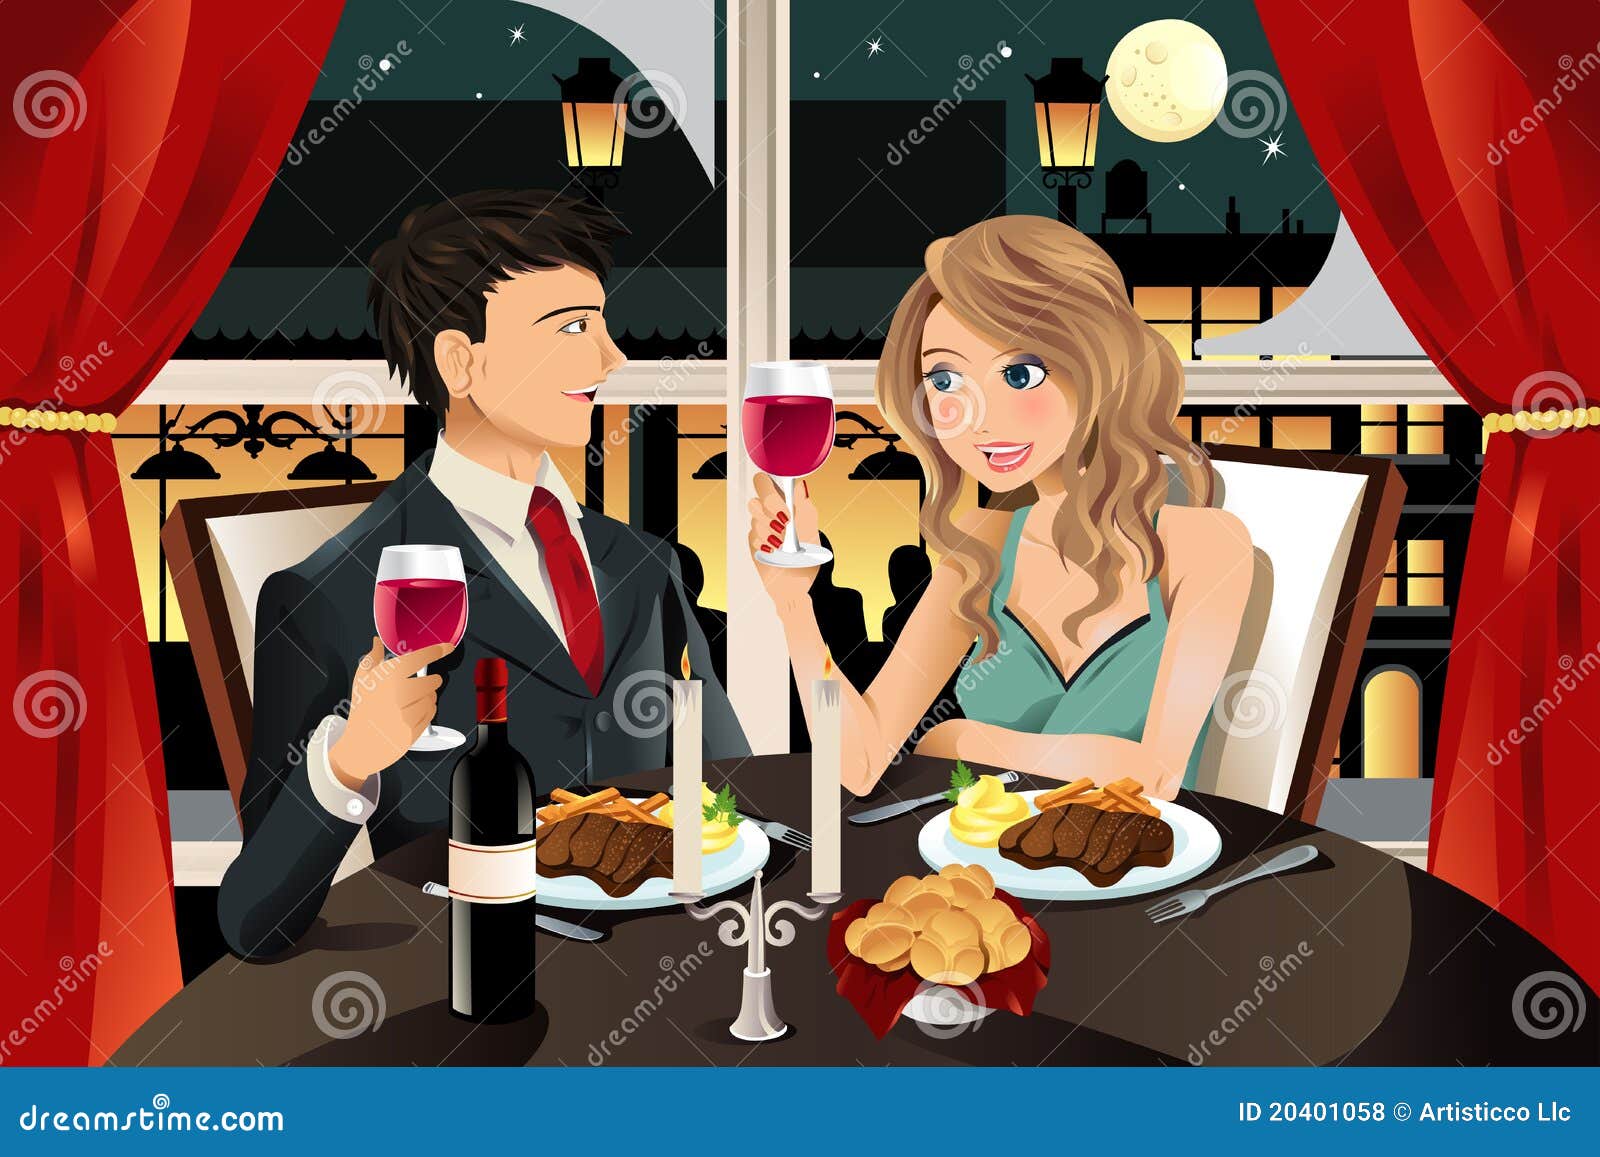 Couple in restaurant stock vector. Illustration of cartoon - 20401058